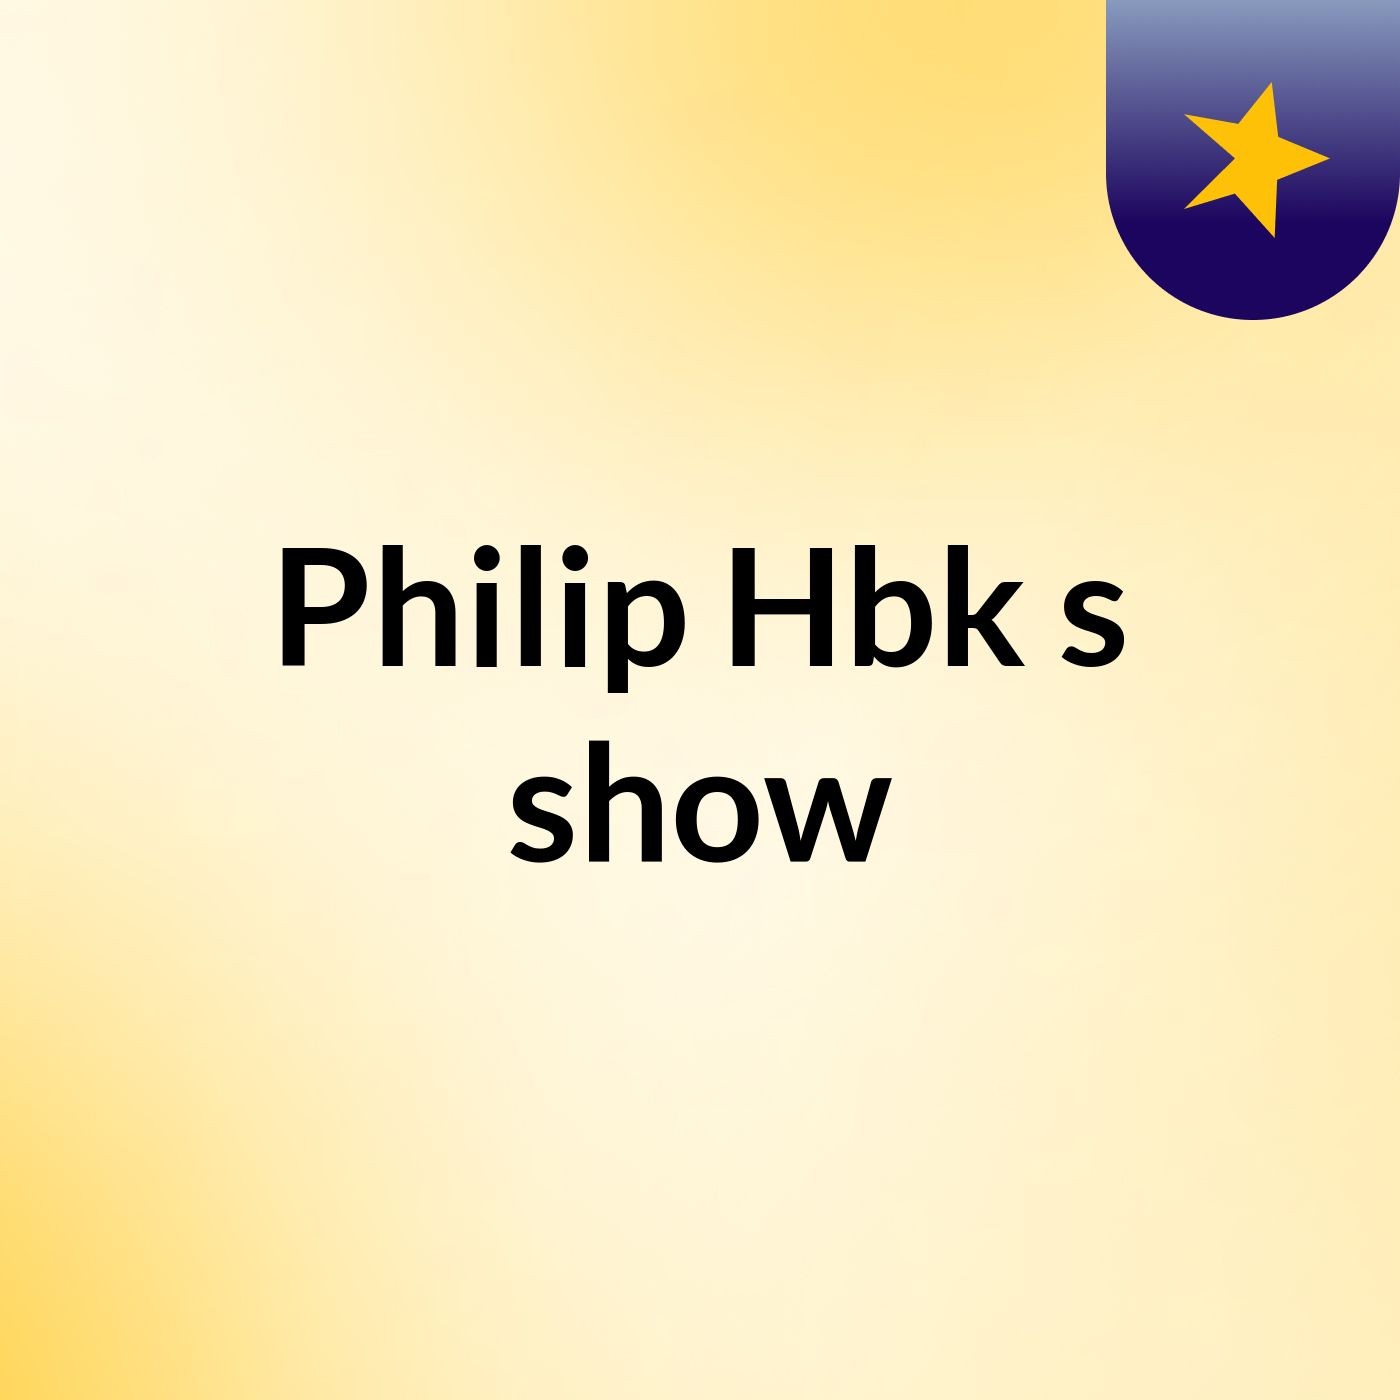 Philip Hbk's show